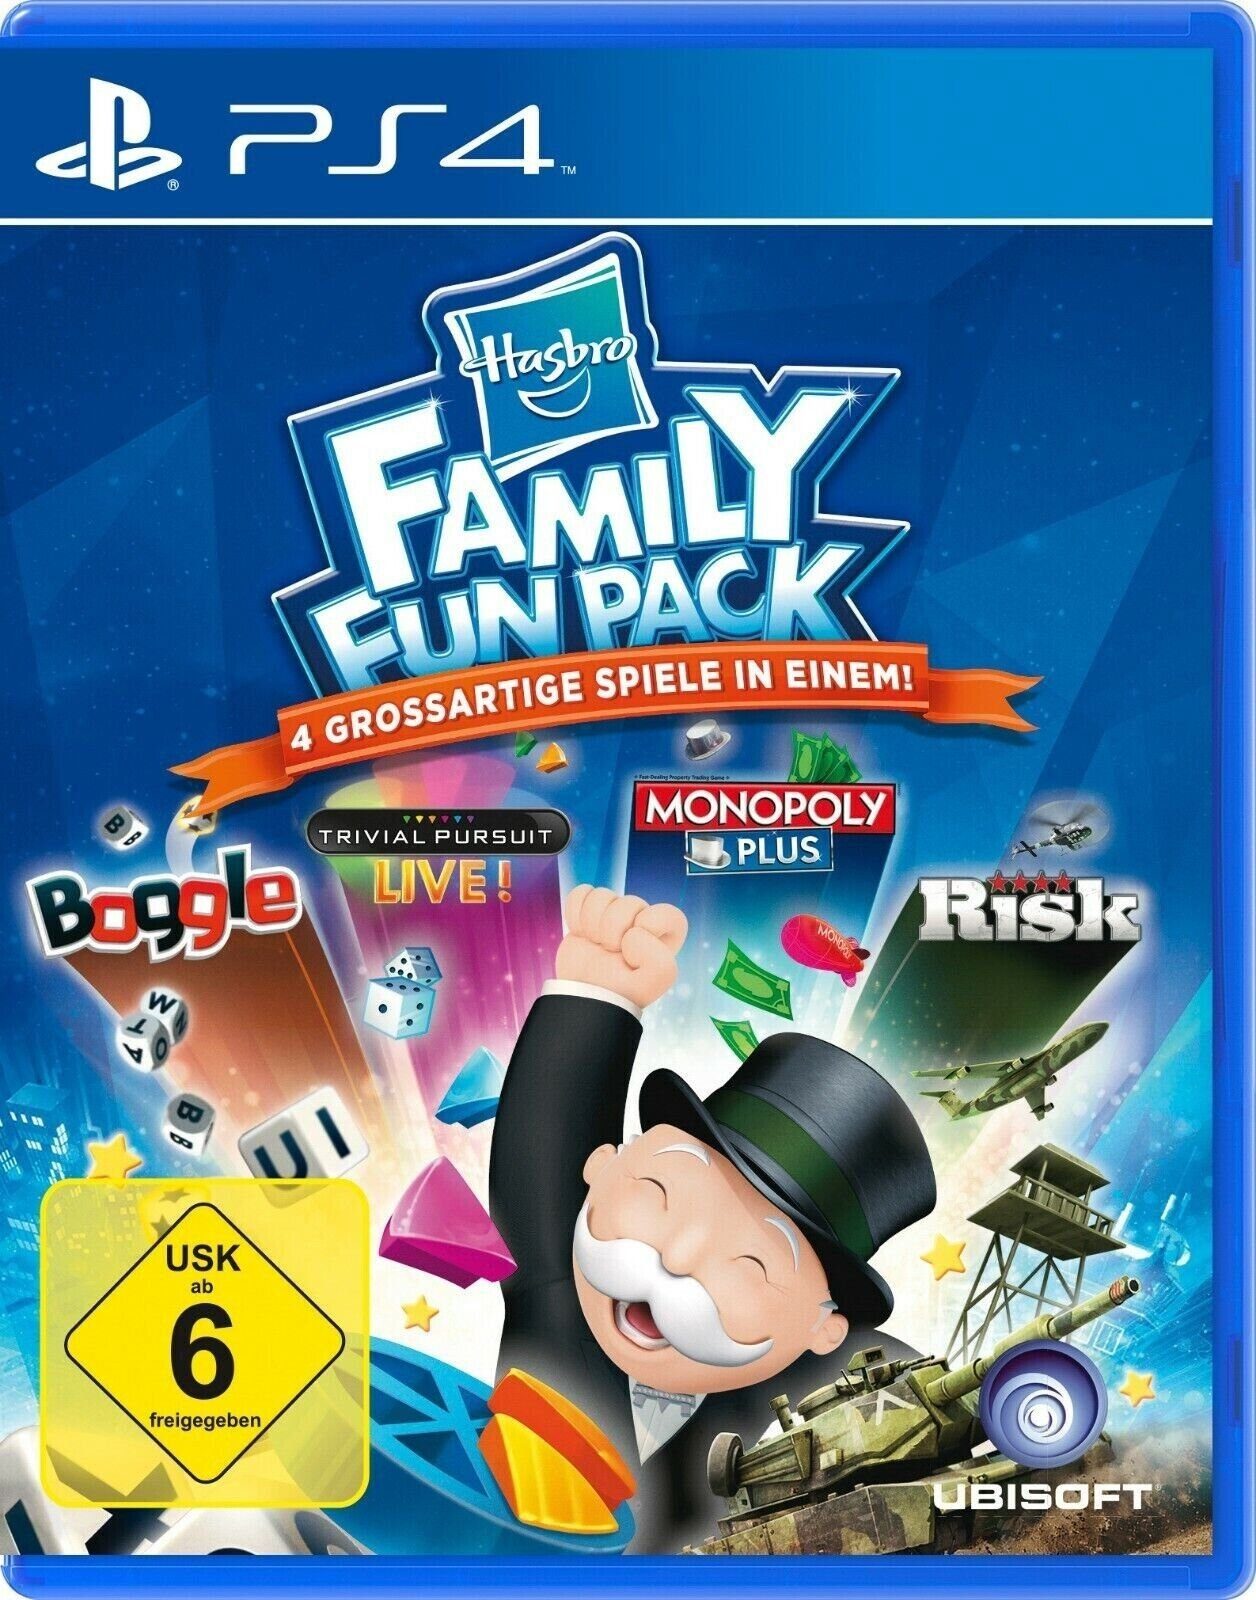 Hasbro Family Fun Pack Sony PlayStation 4 Spiel Familienspiel Monopoly Risk Zubehör PlayStation 4 (1 St., Gesellschaftsspiel,USK ab 6,Videogame)